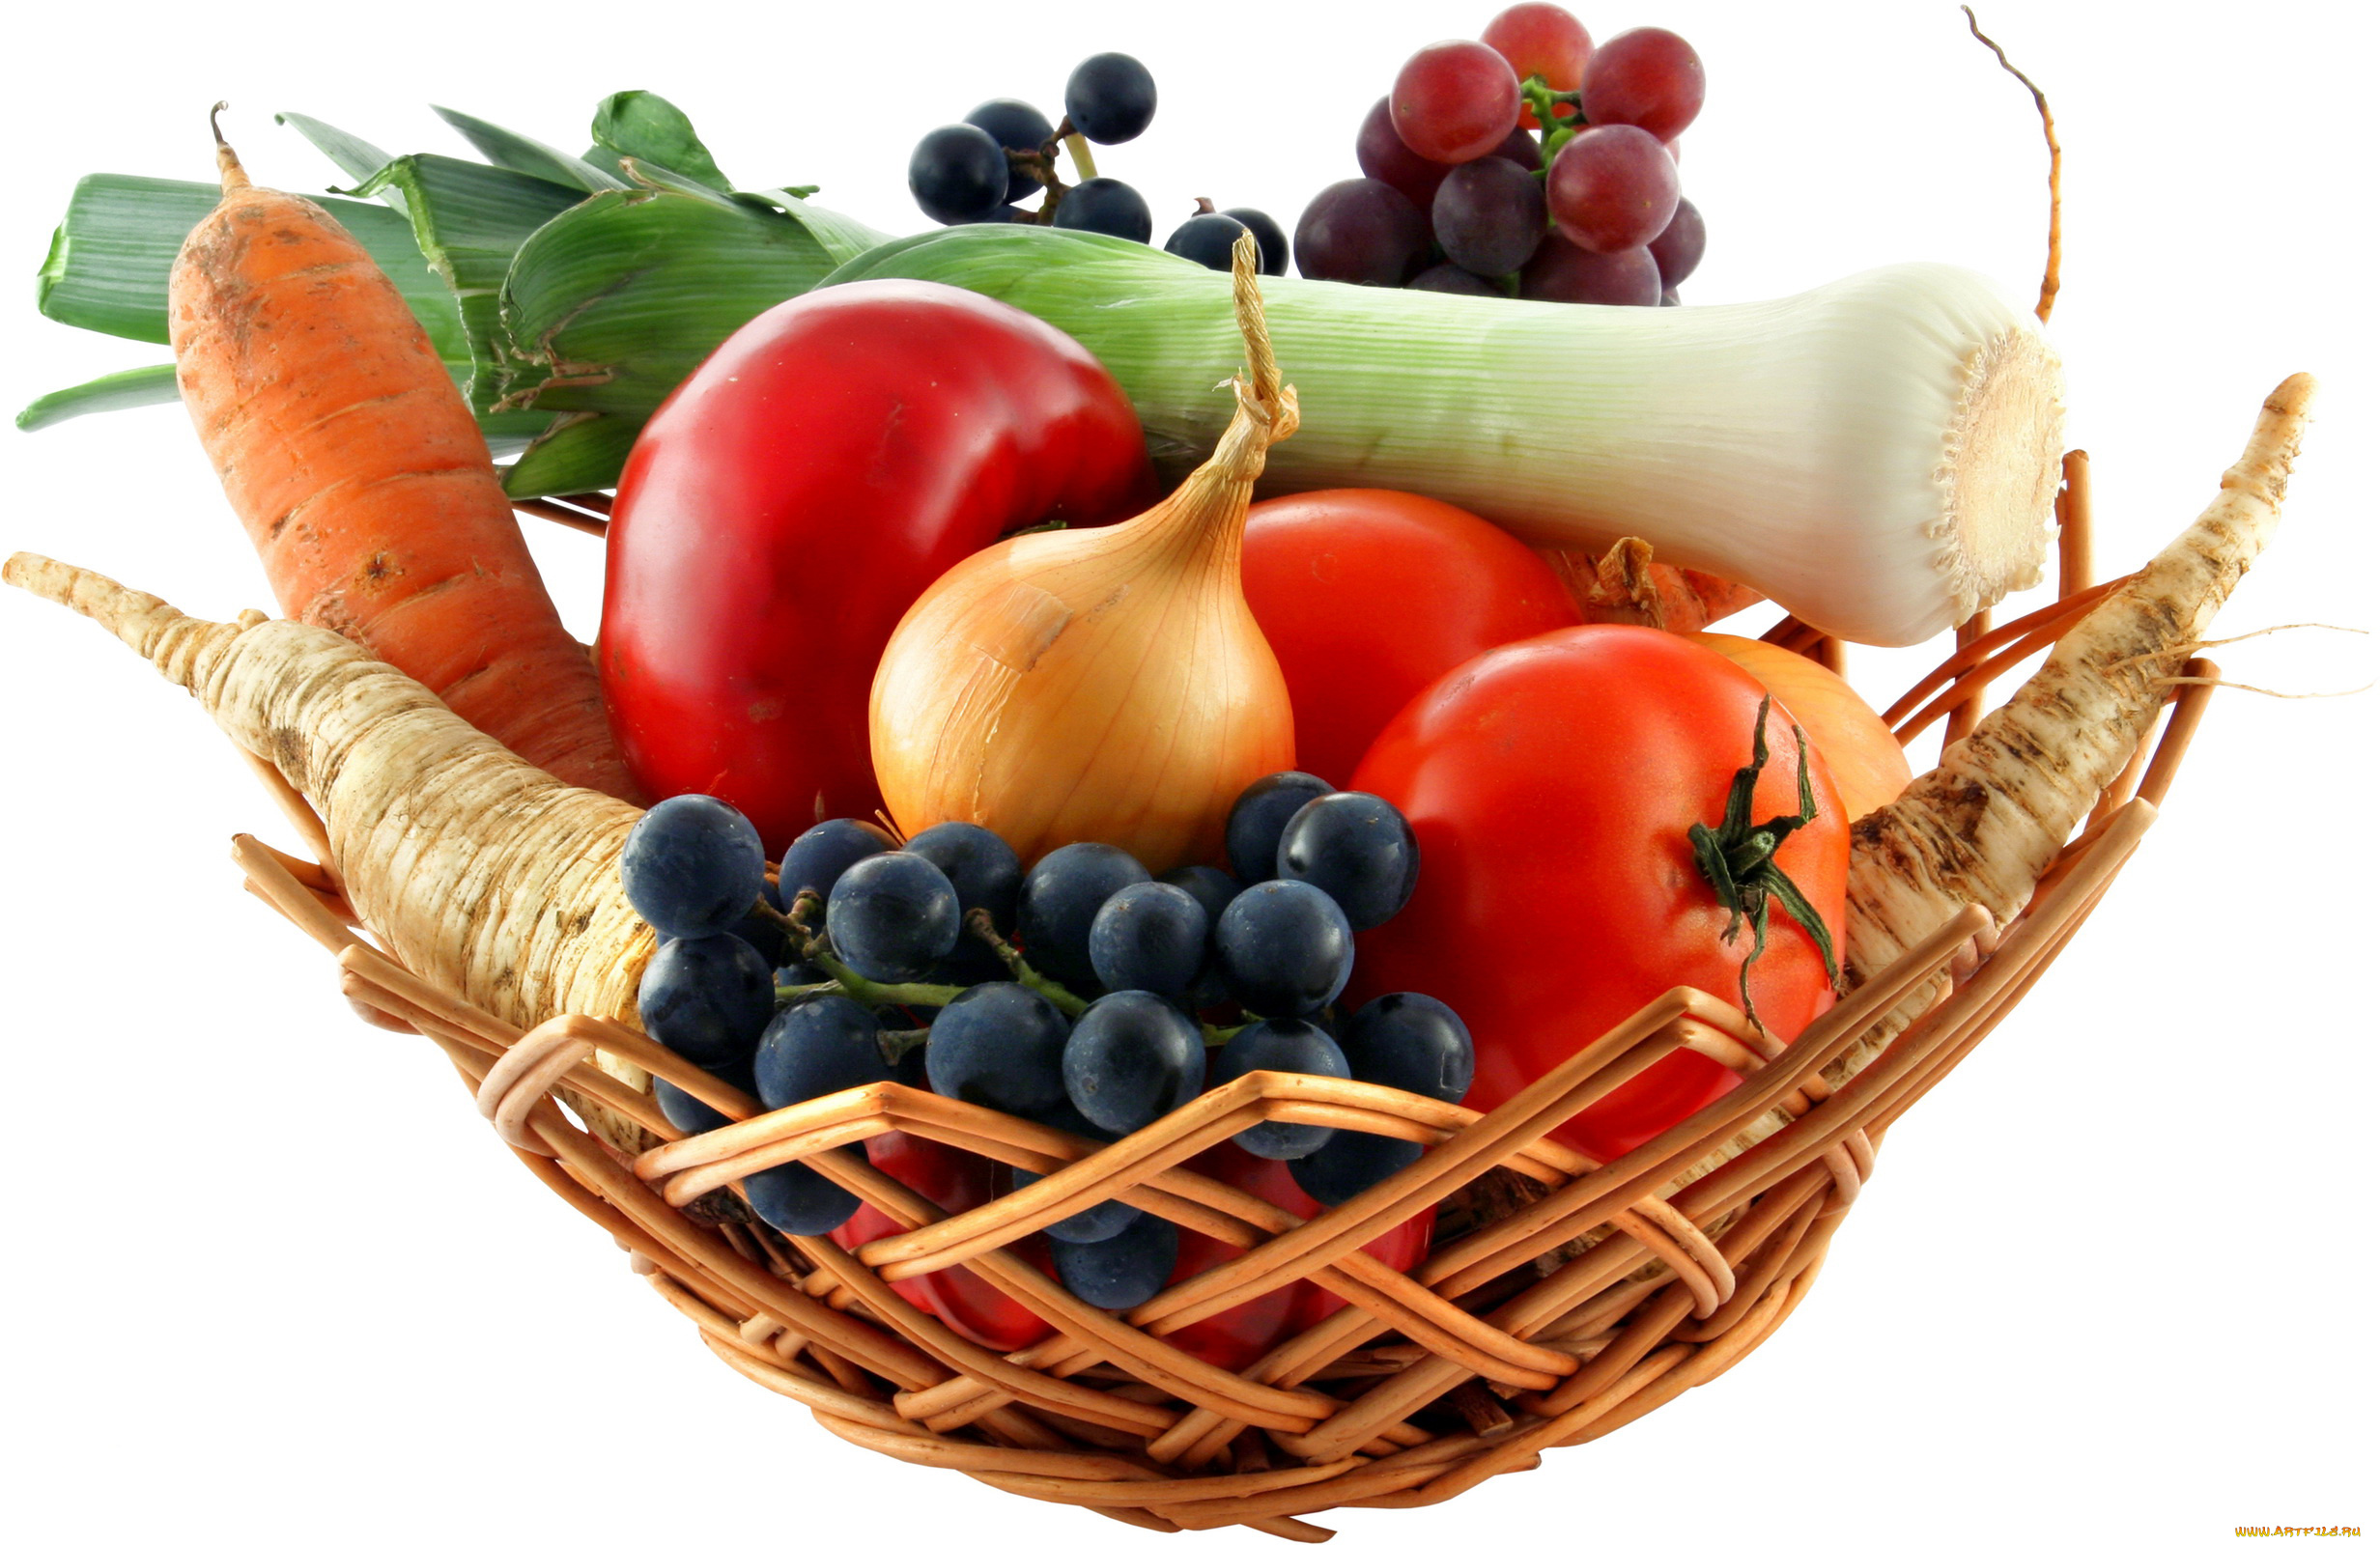 еда, фрукты, овощи, вместе, морковь, виноград, корзинка, помидоры, томаты